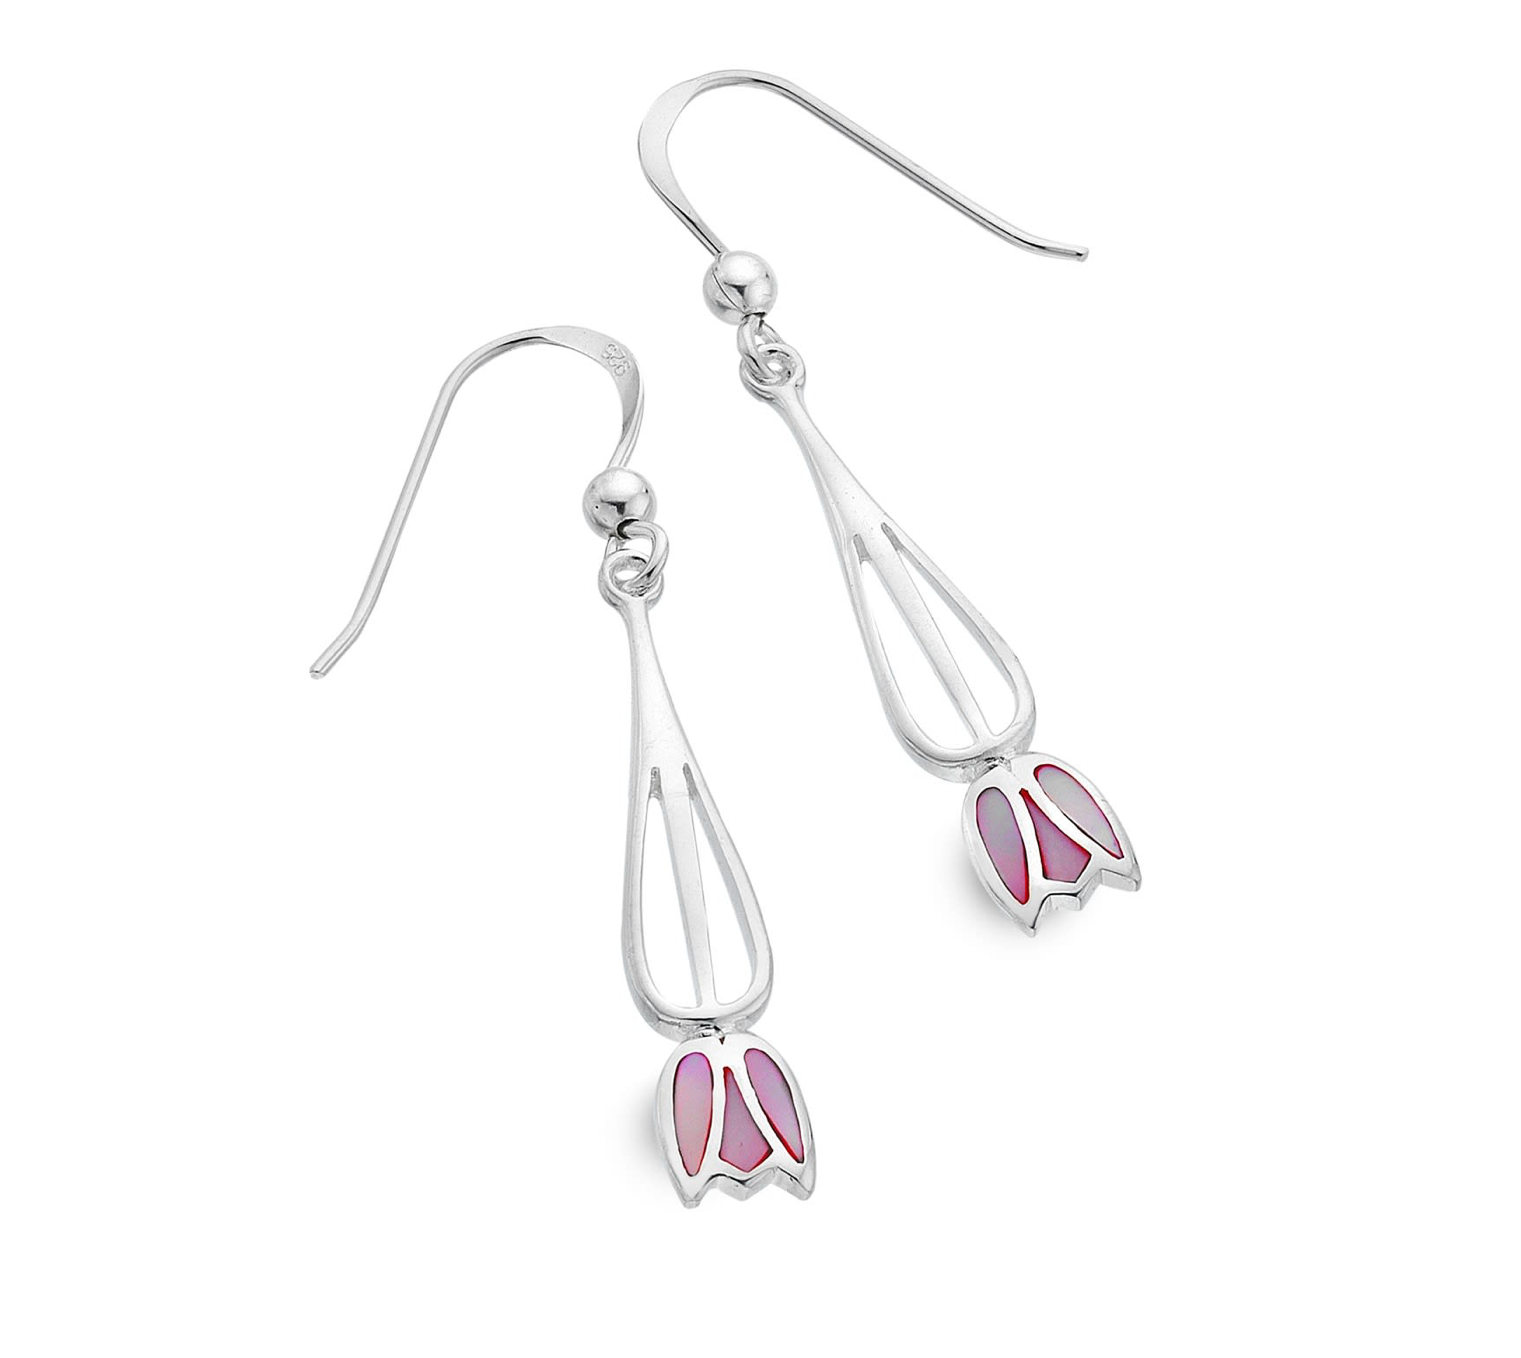 Sea Gems Sterling Silver and Enamel Mackintosh Drop Earrings  - 6133